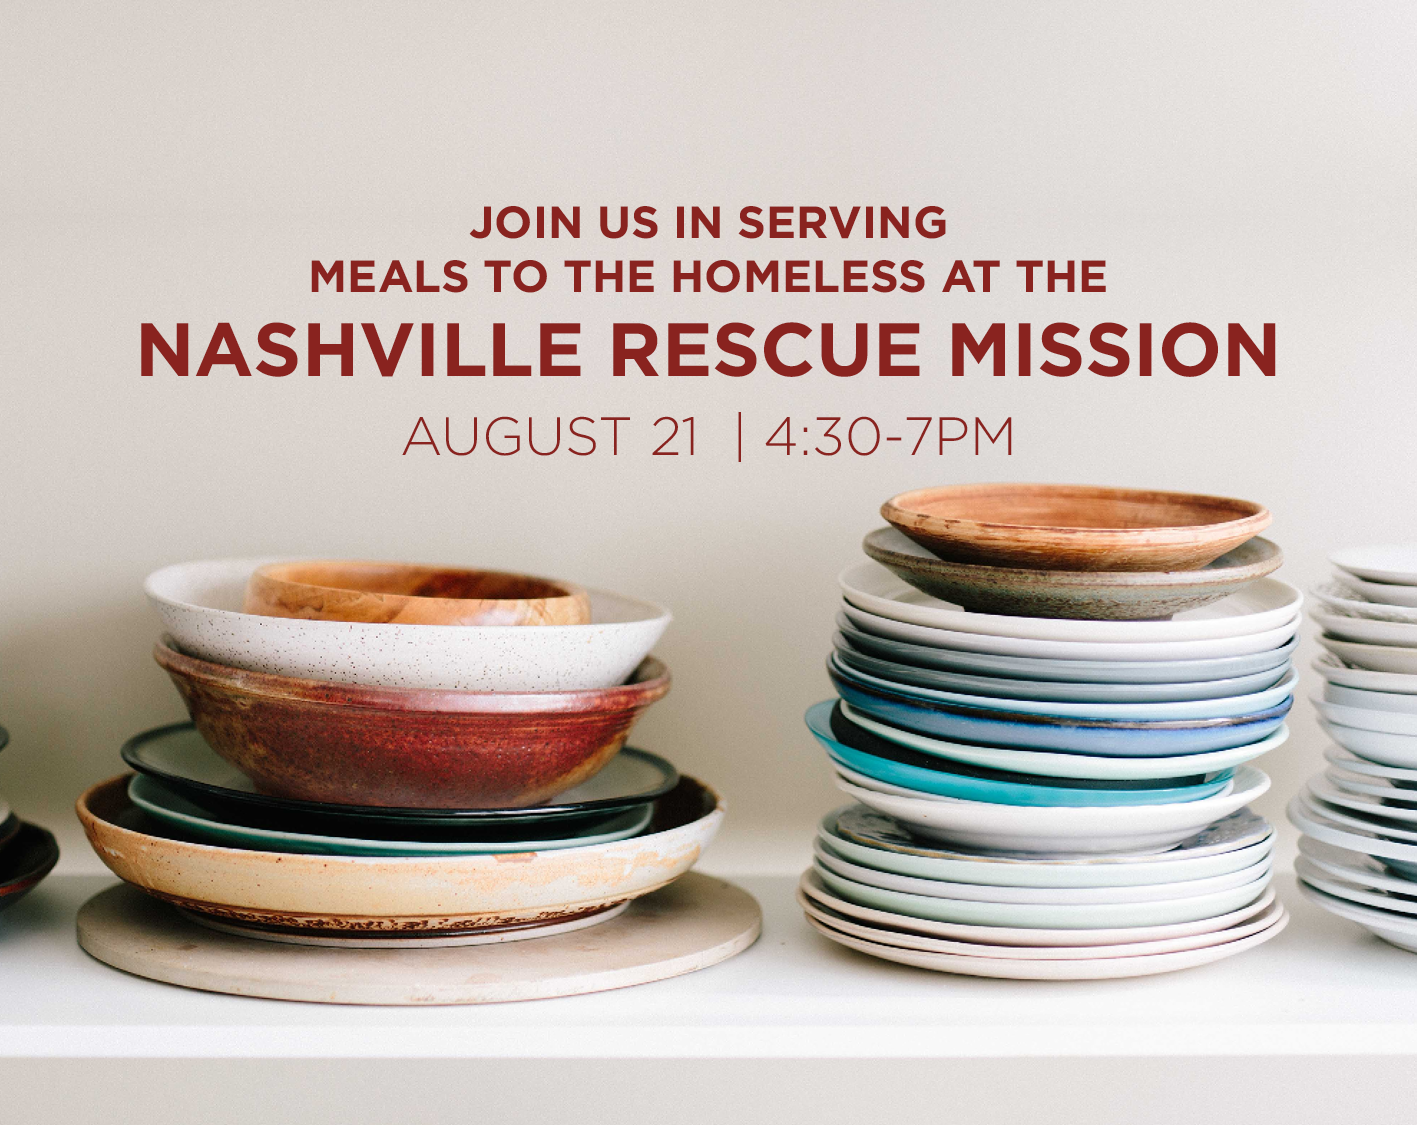 Nashville Rescue Mission